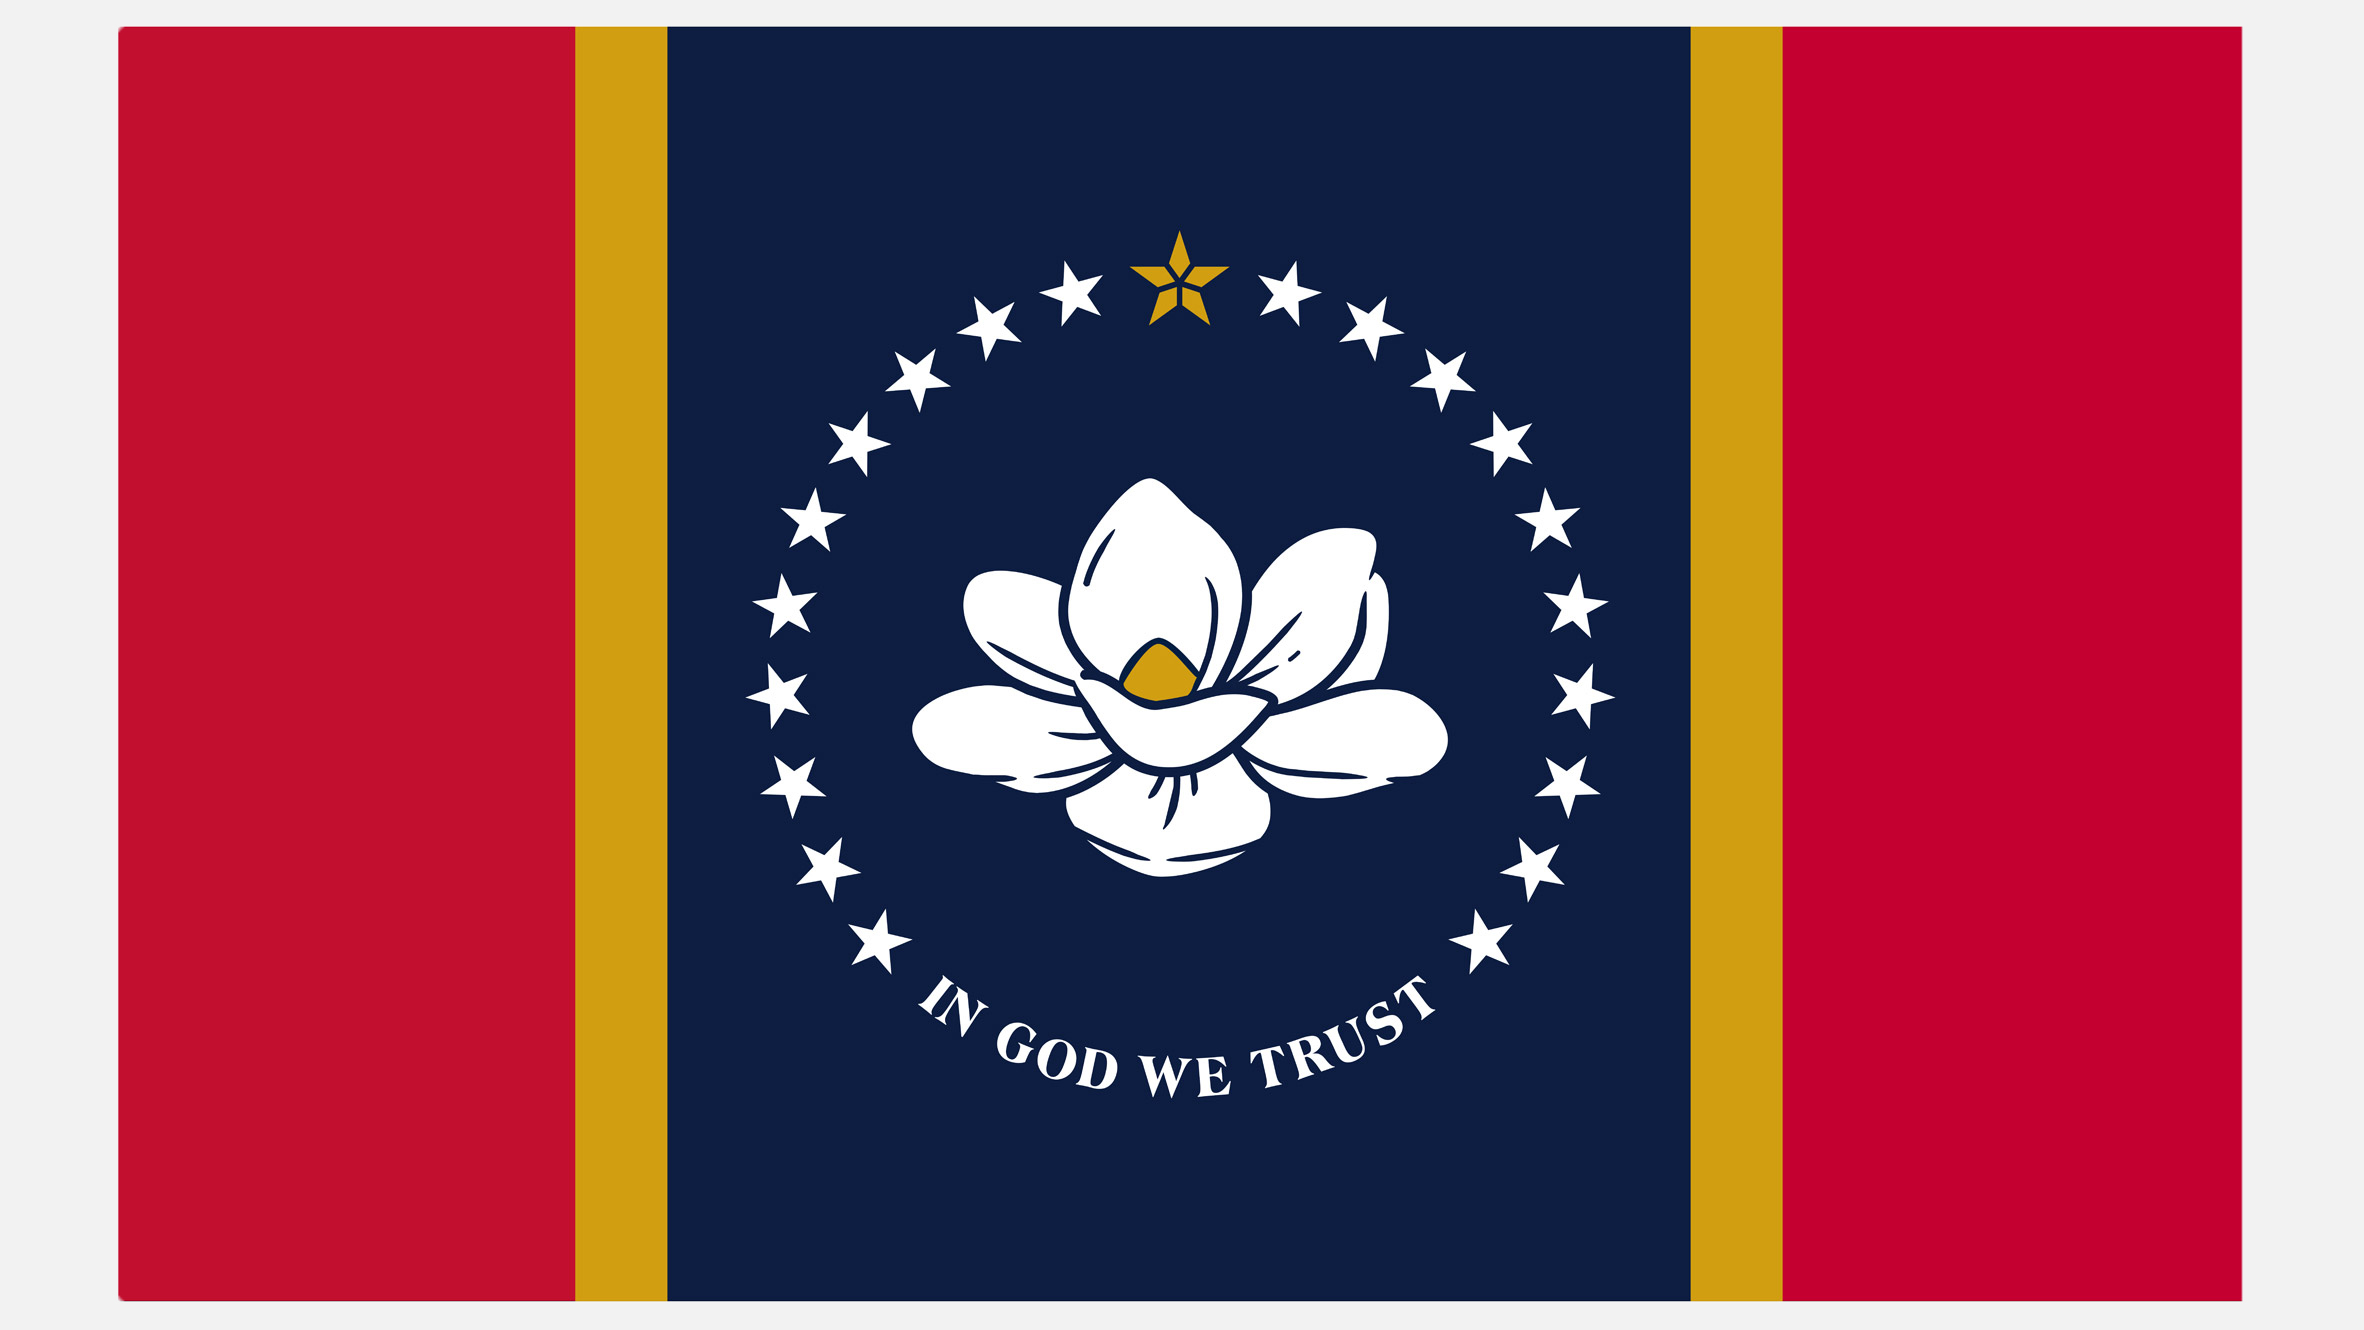 In God We Trust flag for Mississippi